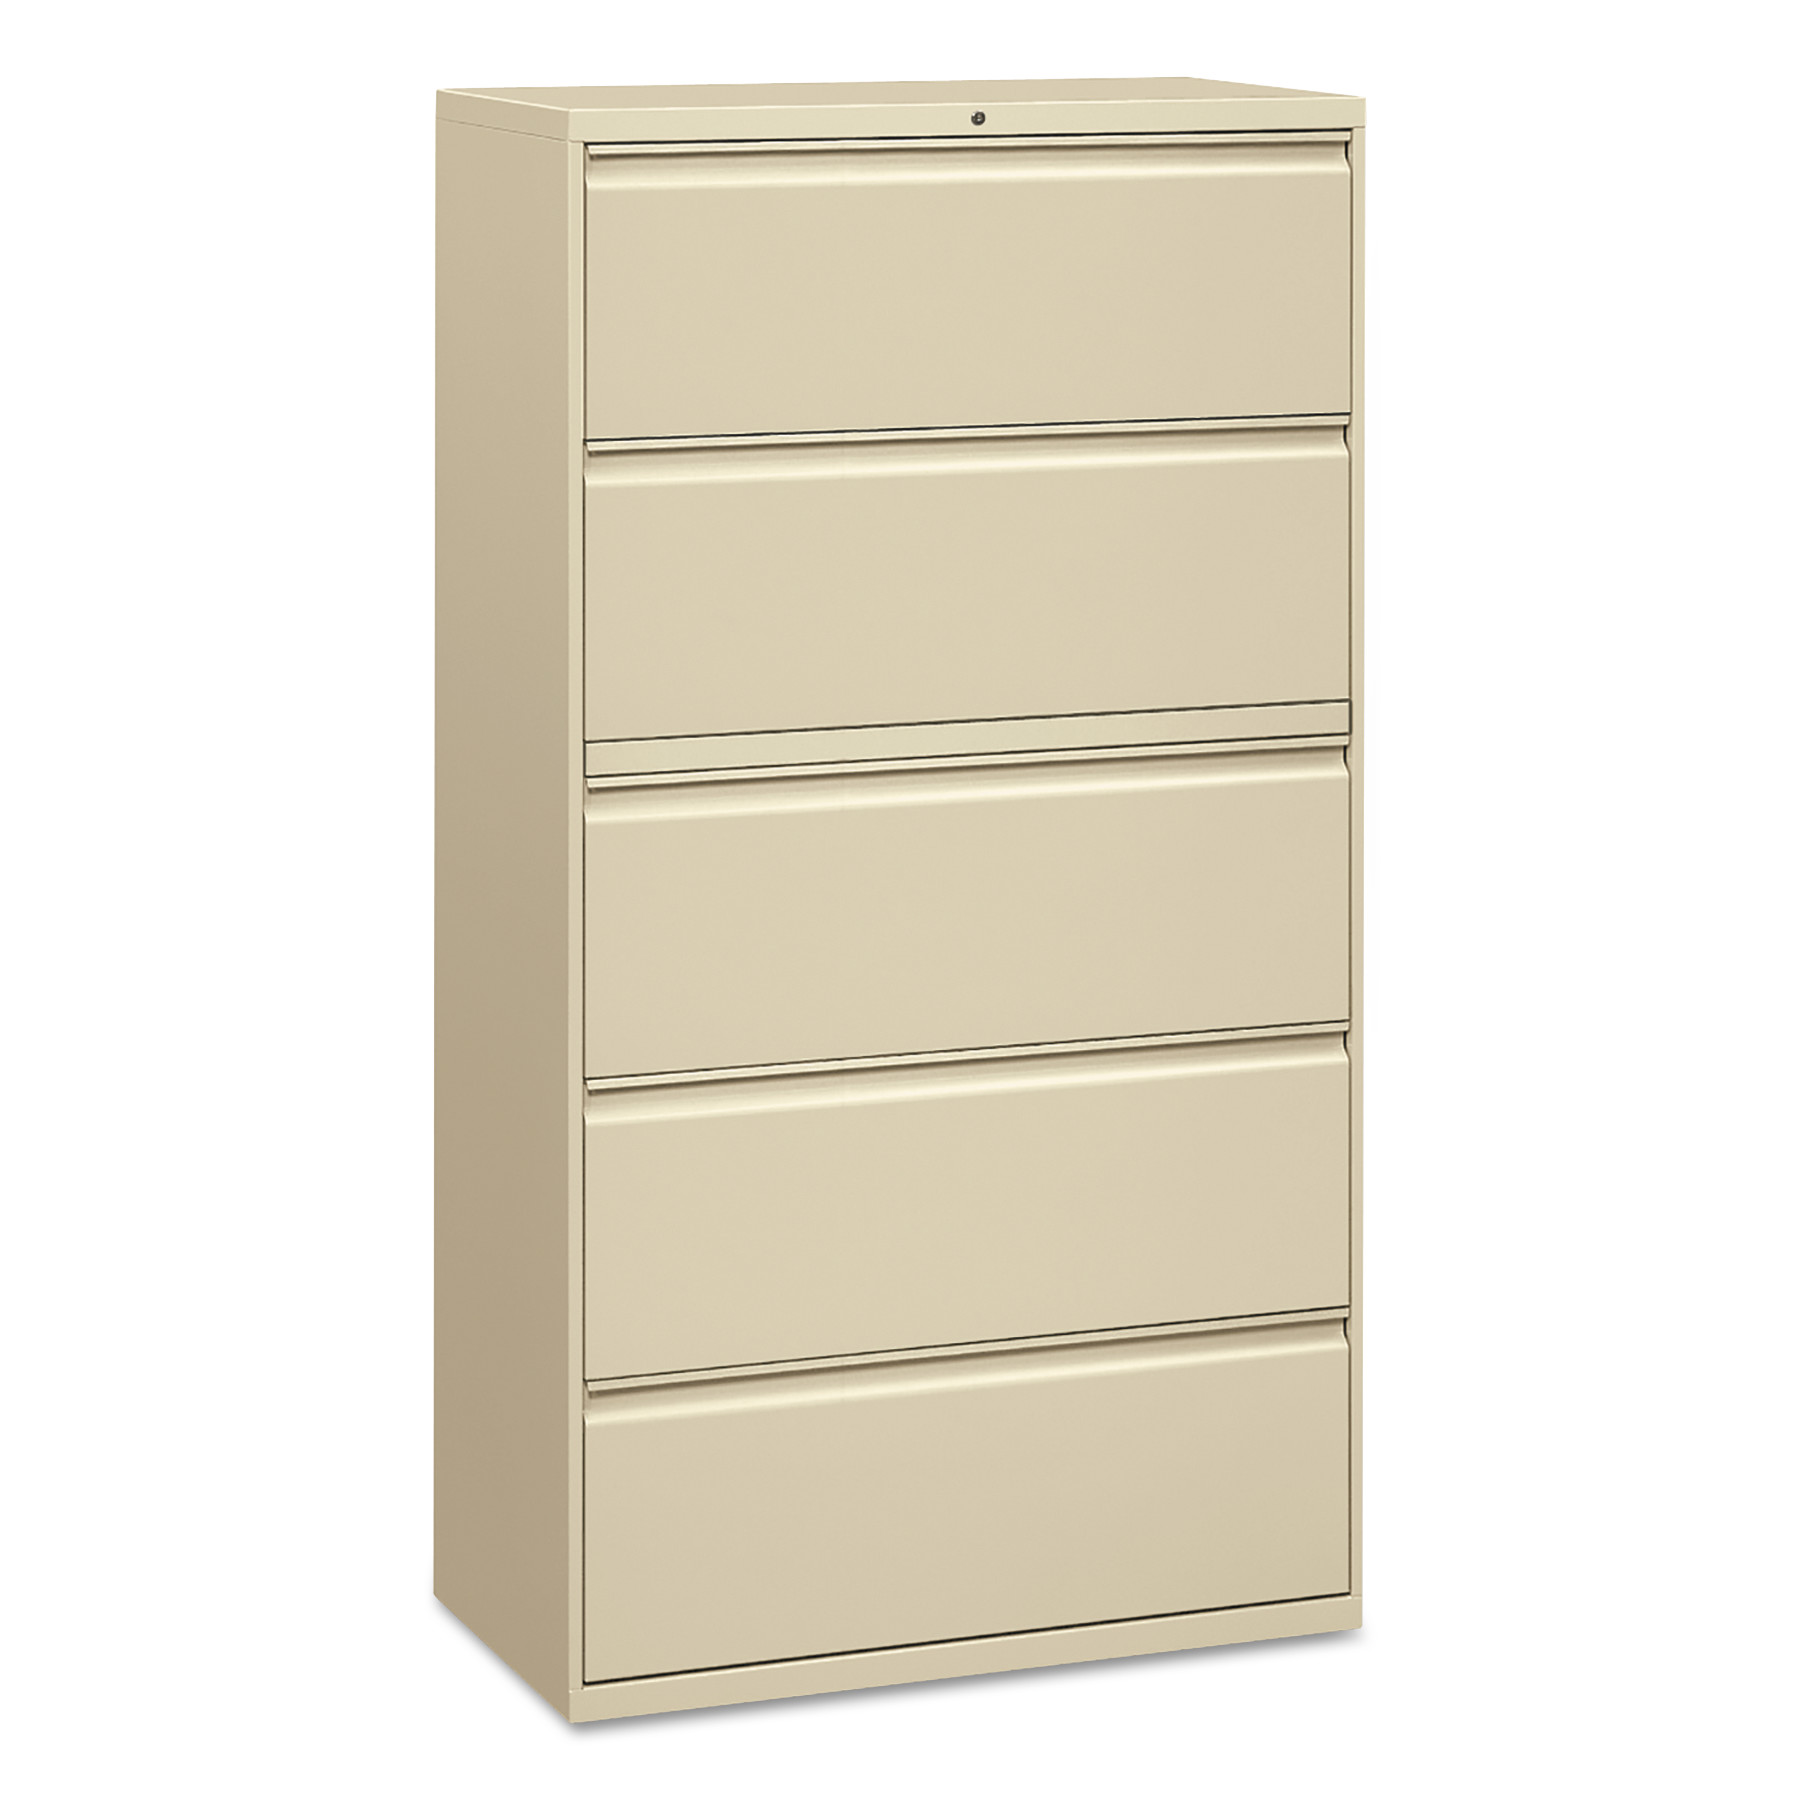  Alera ALELF3667PY Five-Drawer Lateral File Cabinet, 36w x 18d x 64.25h, Putty (ALELF3667PY) 